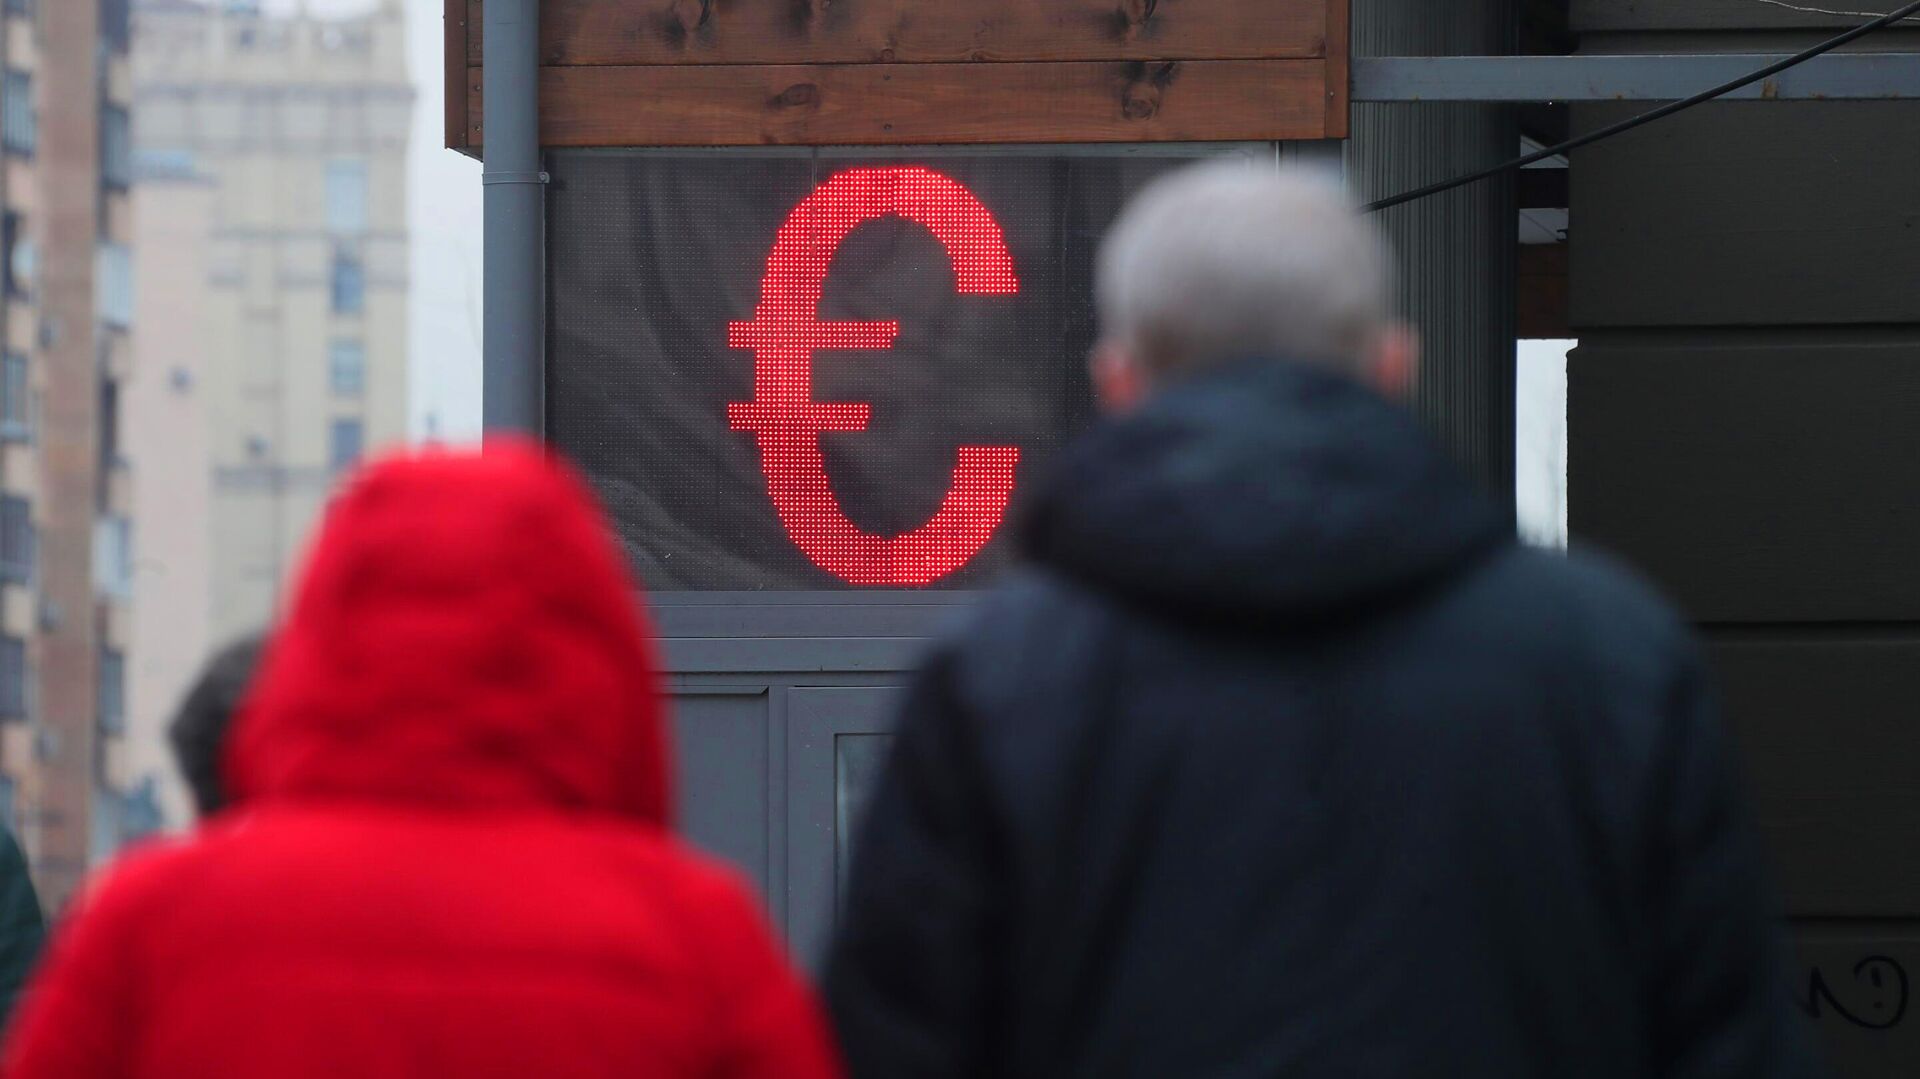 Официальный курс евро на пятницу снизился на 31 копейку, до 86,82 рубля